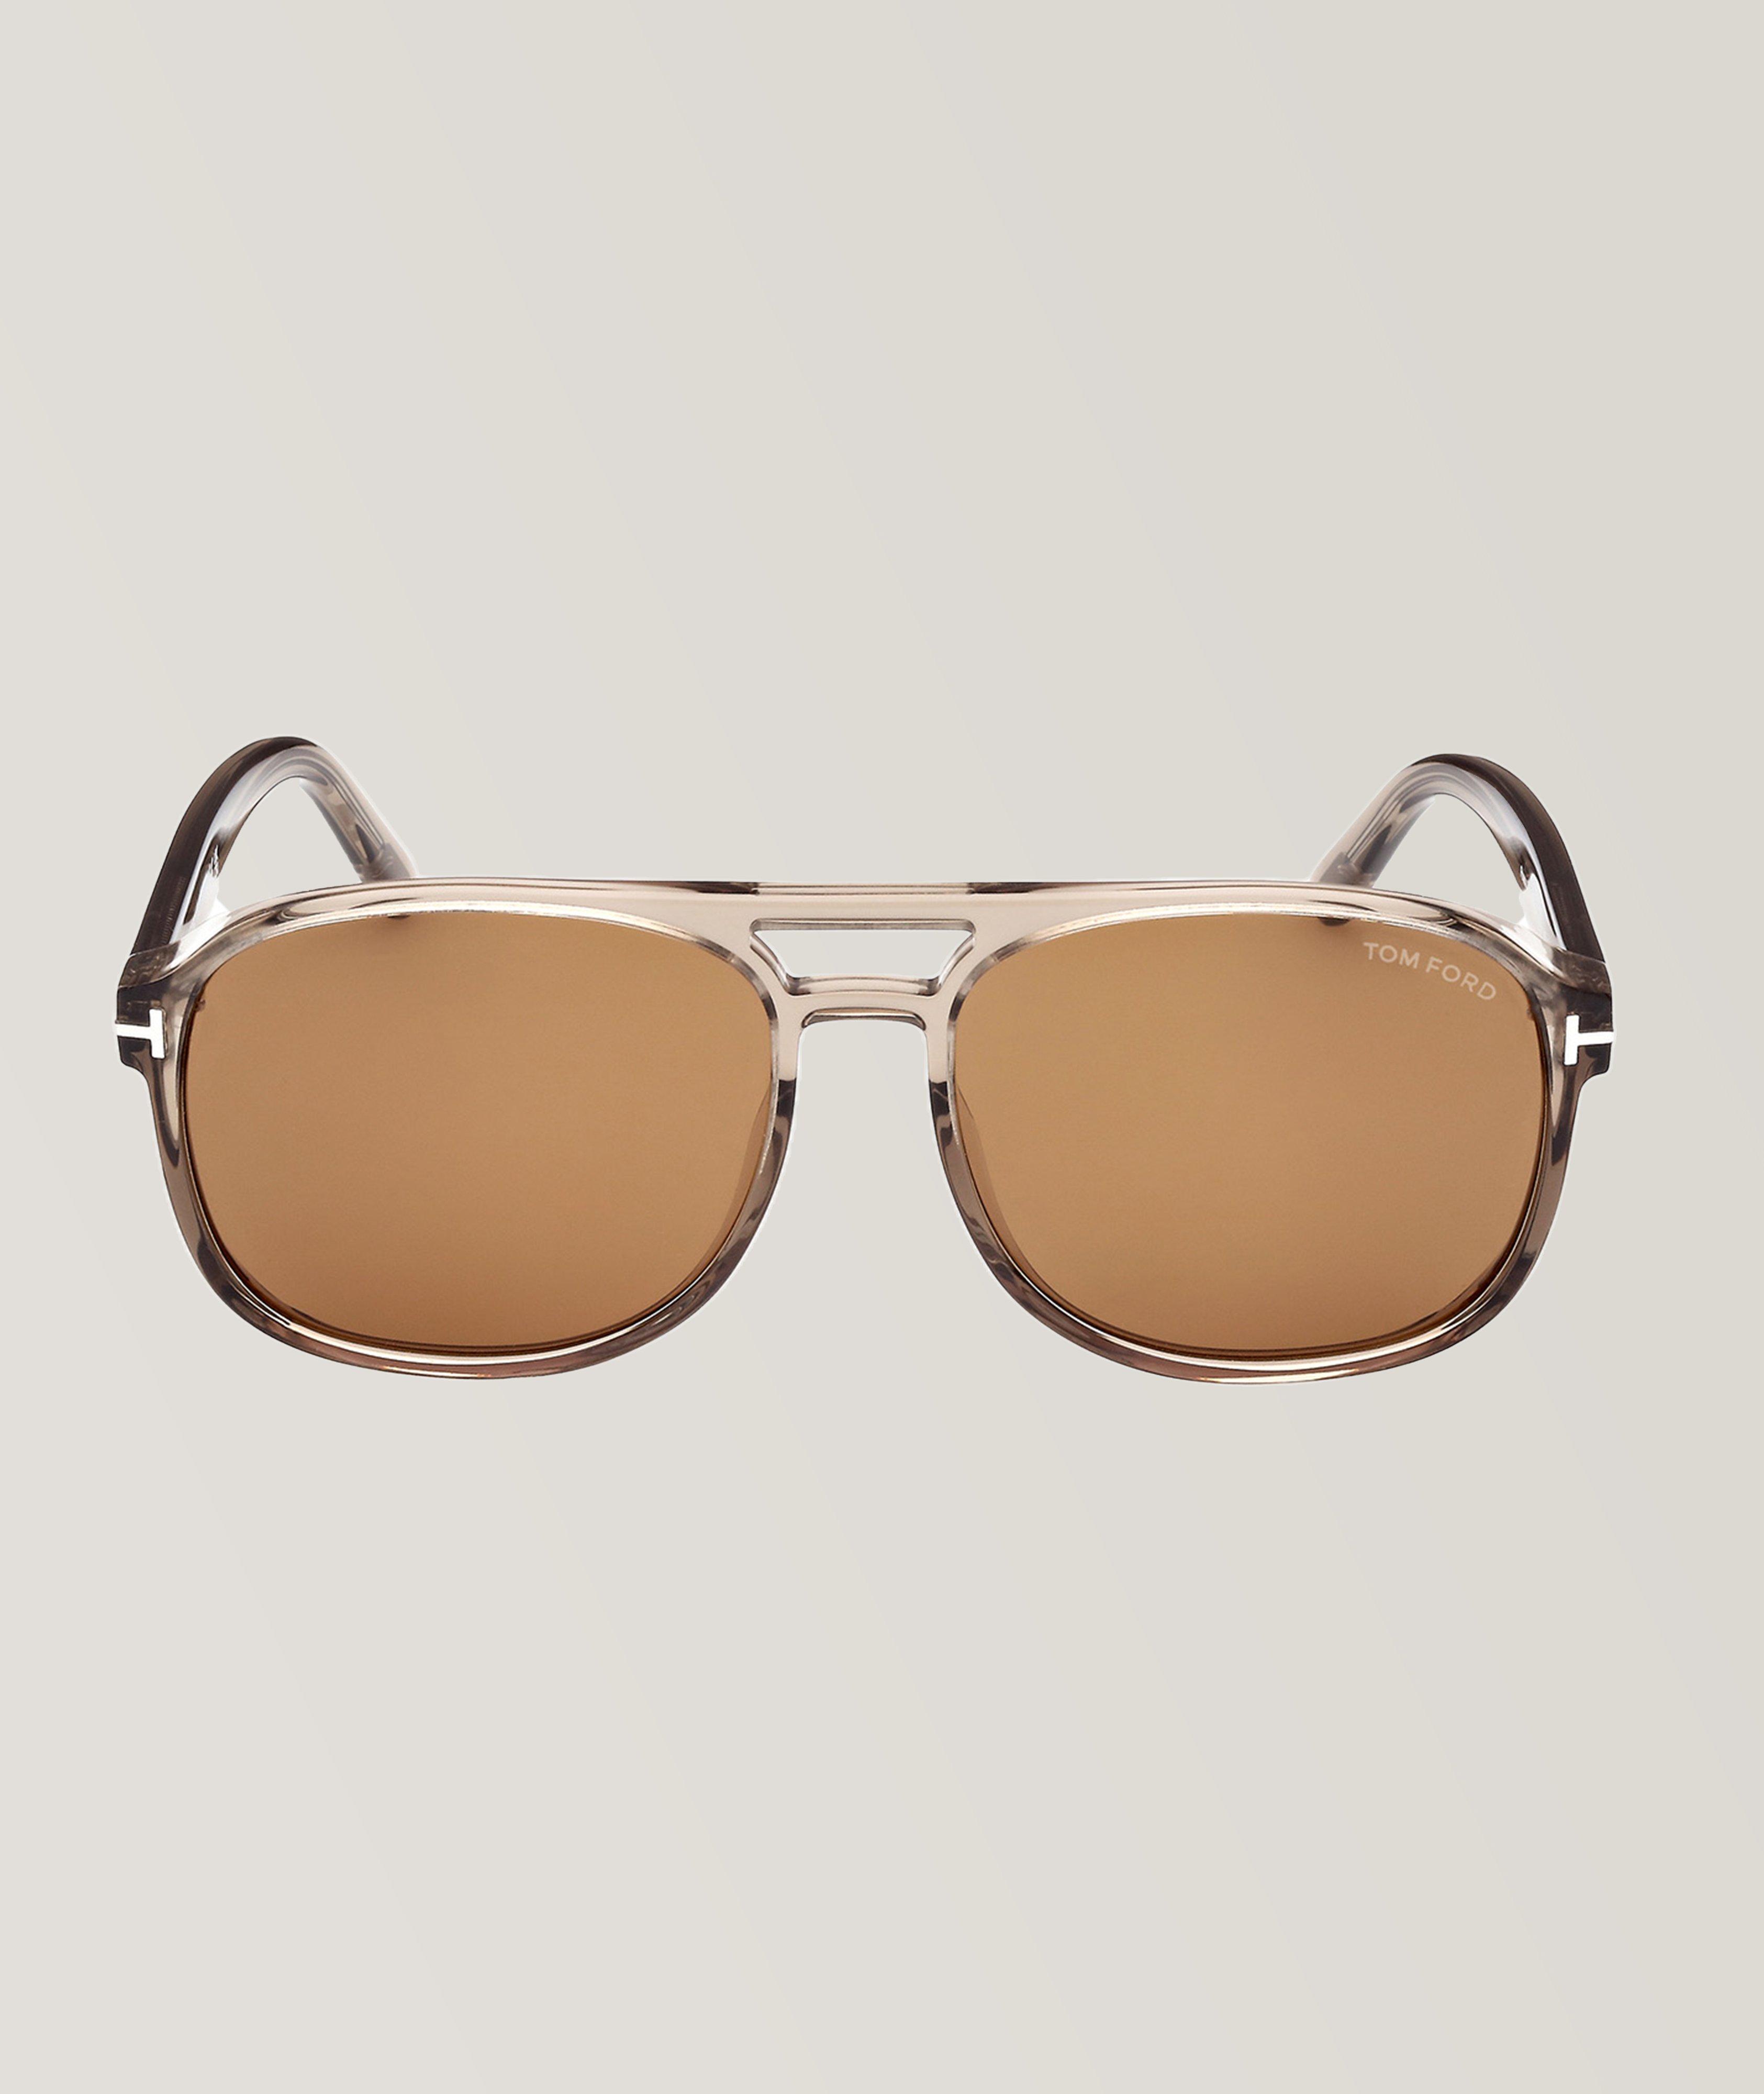 Brady Navigator Frame Sunglasses image 2